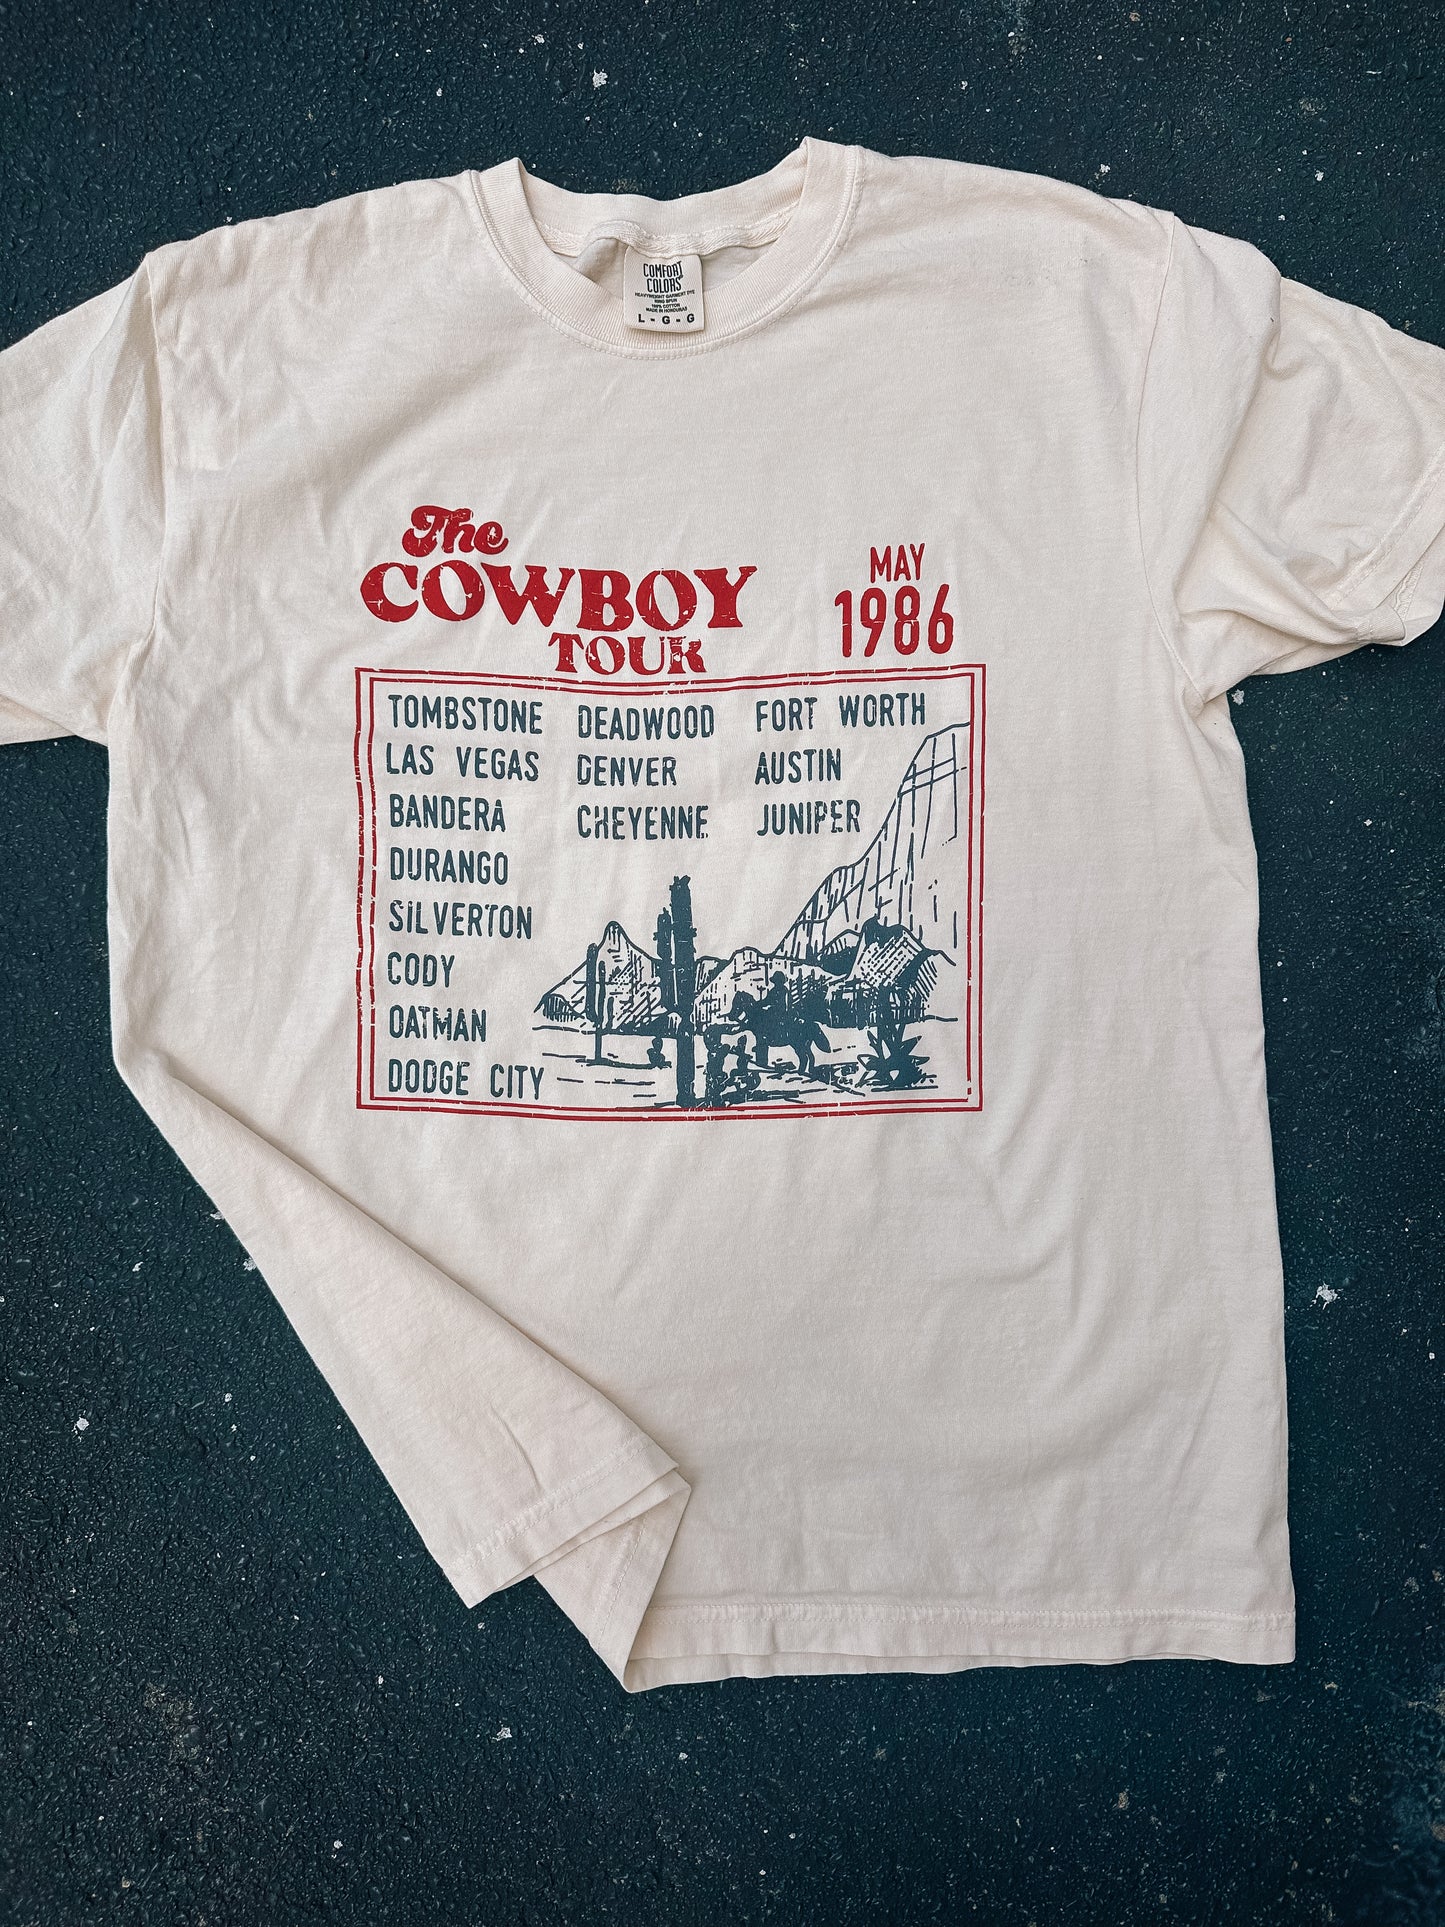 The Cowboy Tour Tee